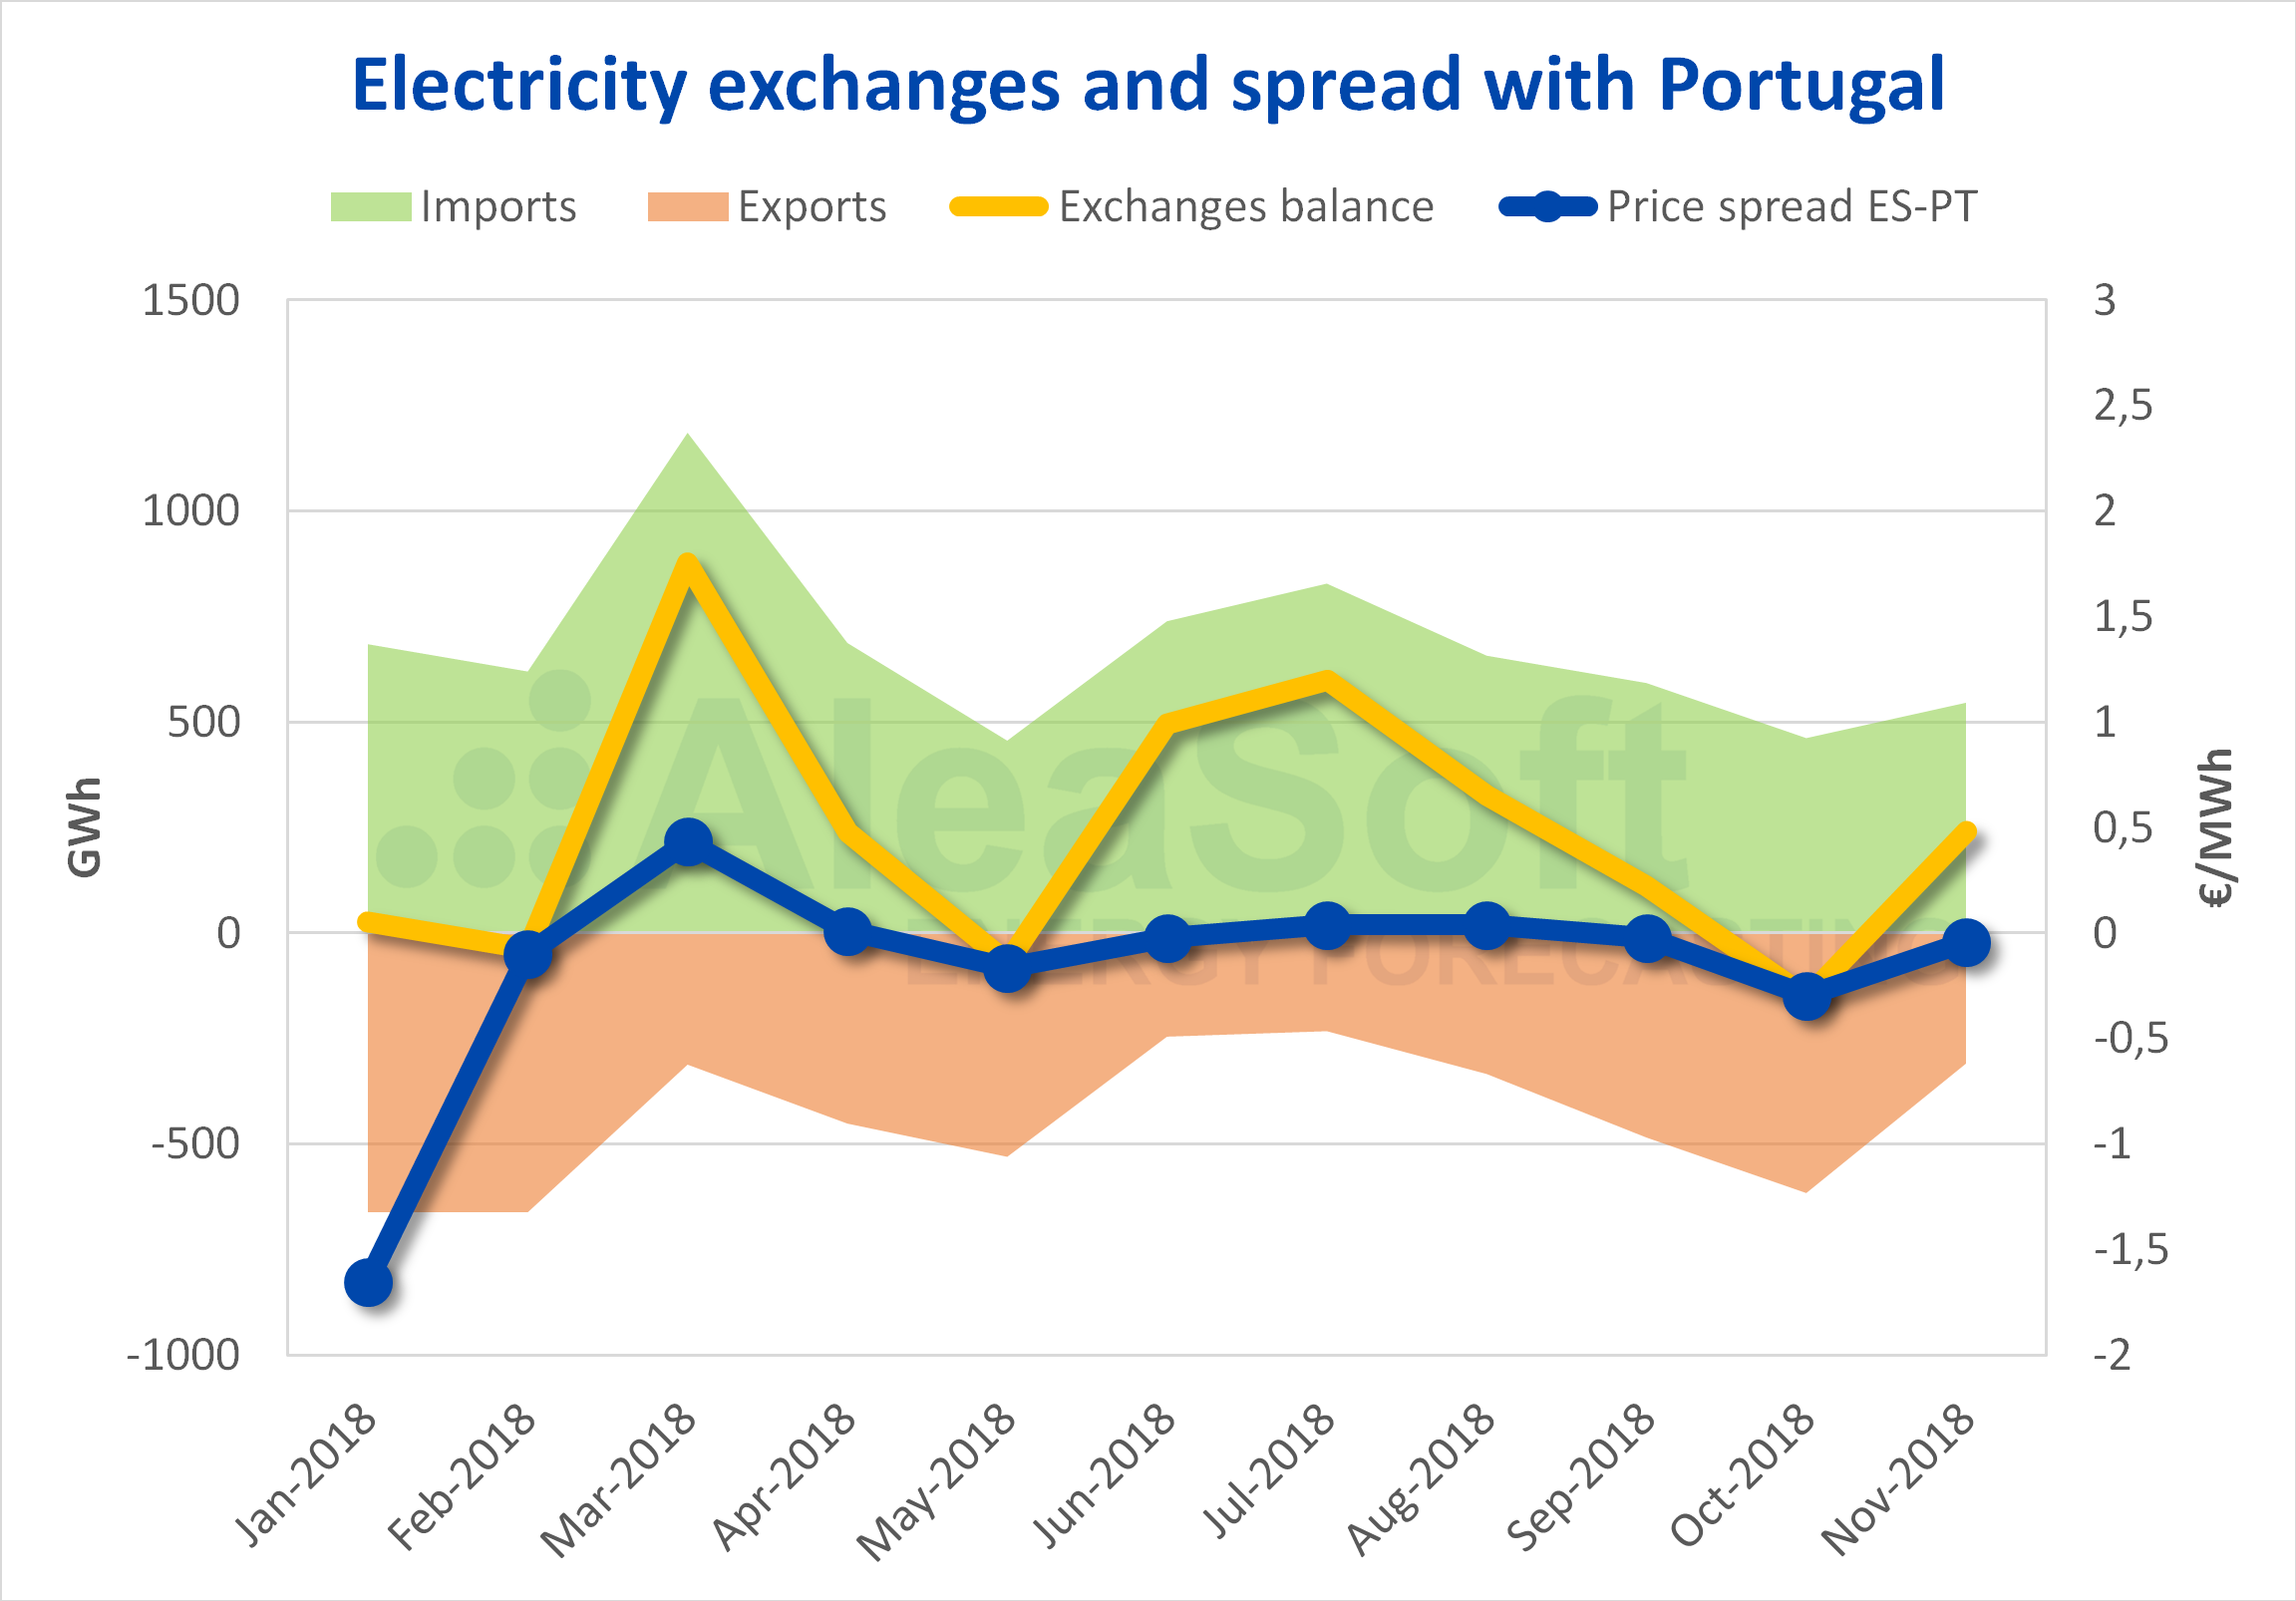 AleaSoft - Electricity exchange spread Spain Portugal